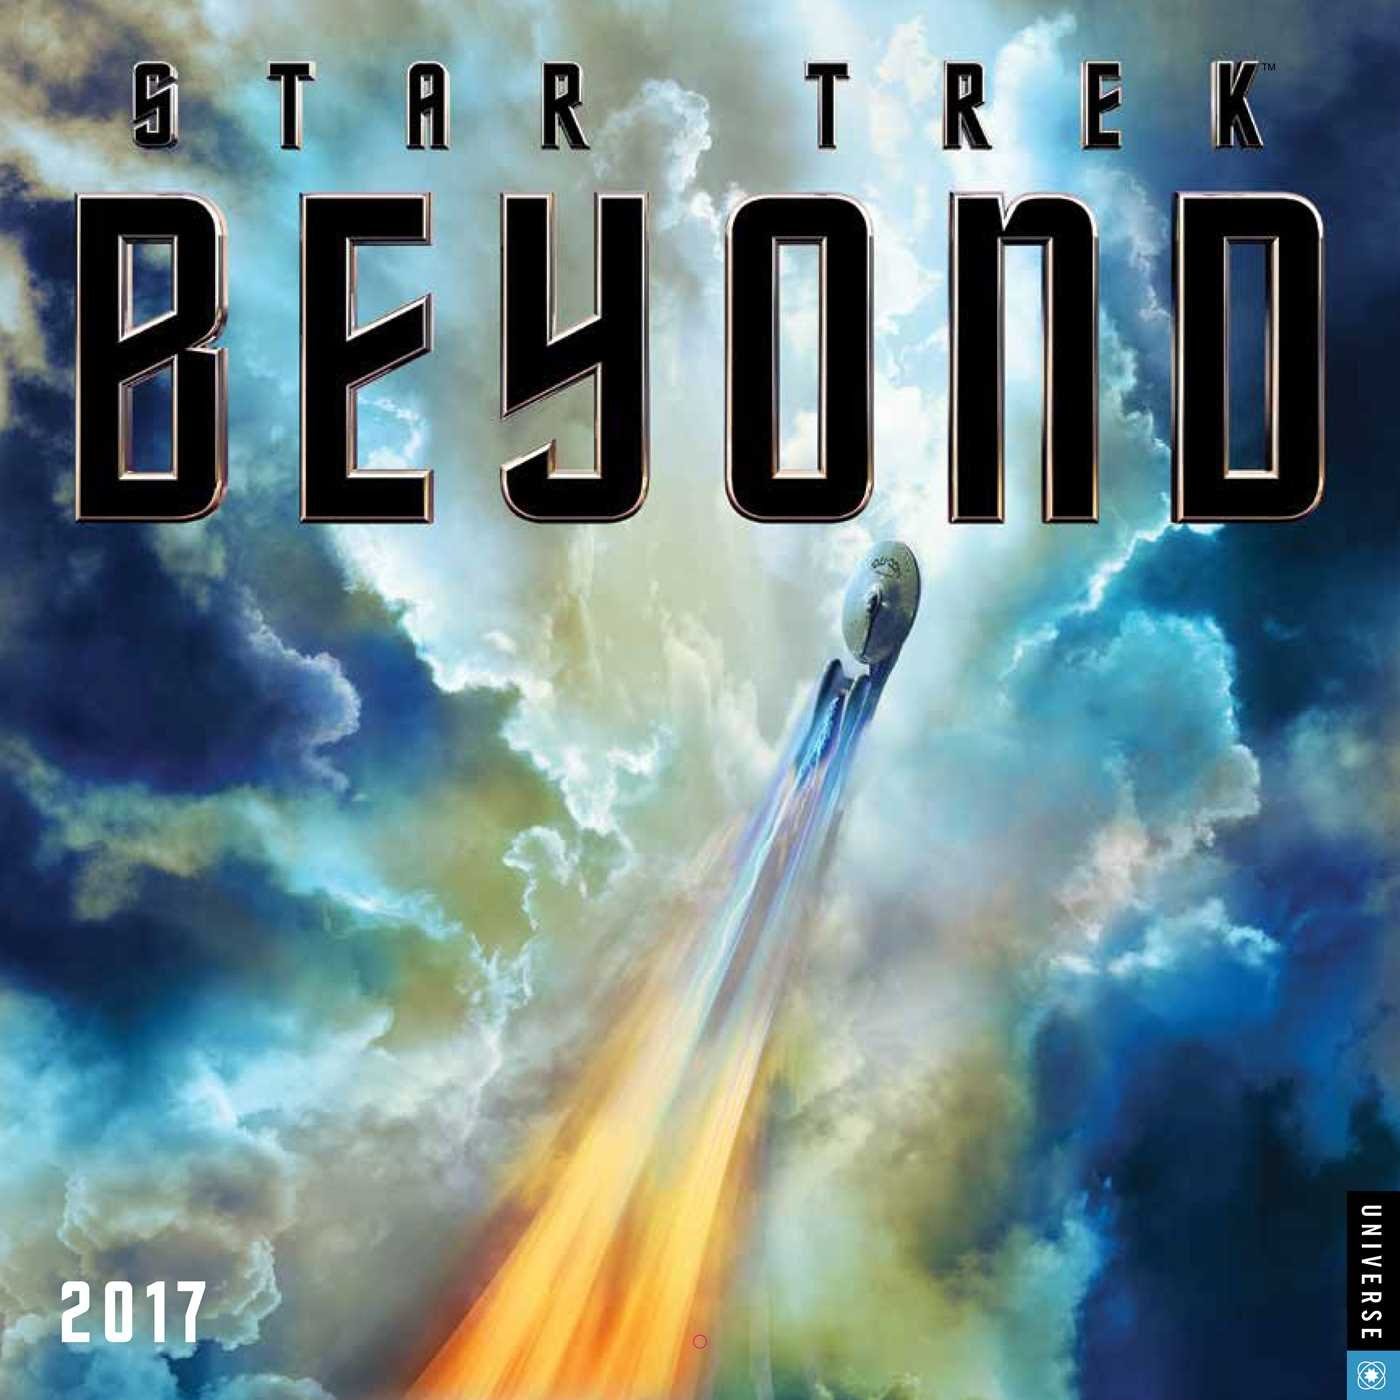 moe ledematen Fitness Trek Collective Lists: 2017 Star Trek calendars